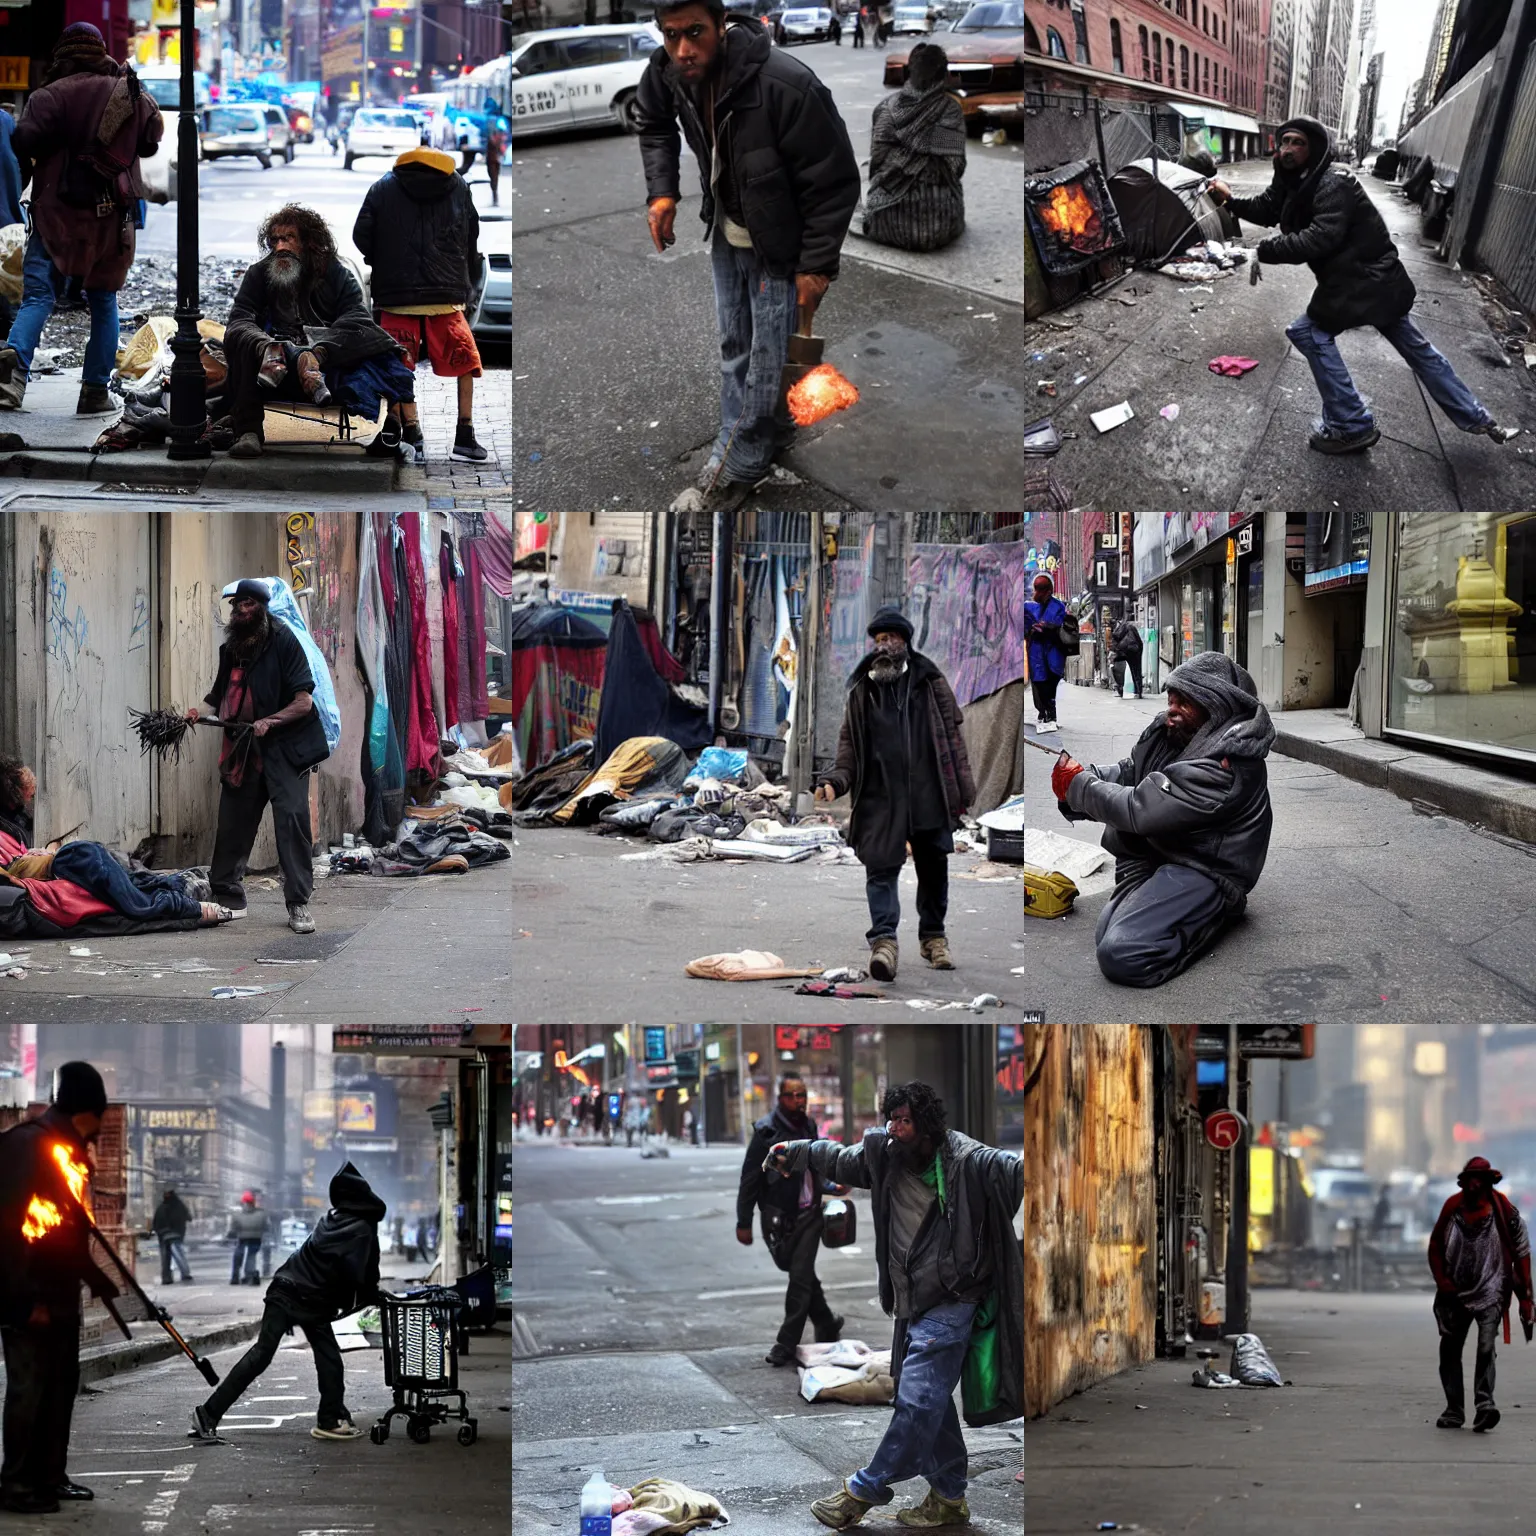 Prompt: <photo hd attention-grabbing location='New York Slums'>Homeless man wields arcane power</photo>